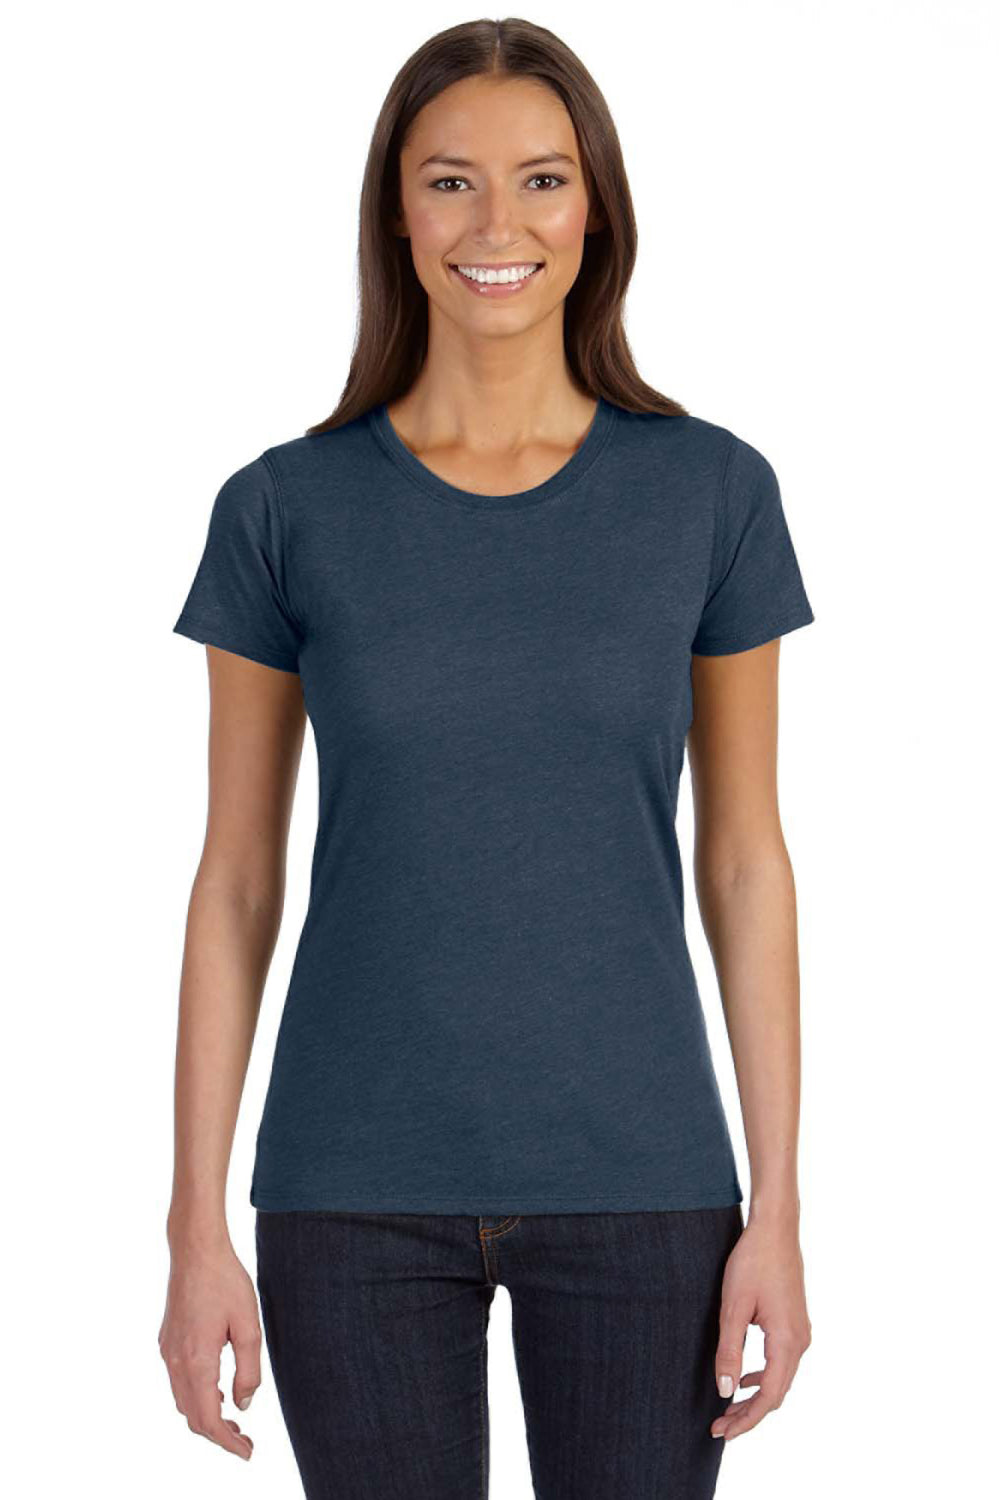 Econscious EC3800 Womens Short Sleeve Crewneck T-Shirt Water Blue Front